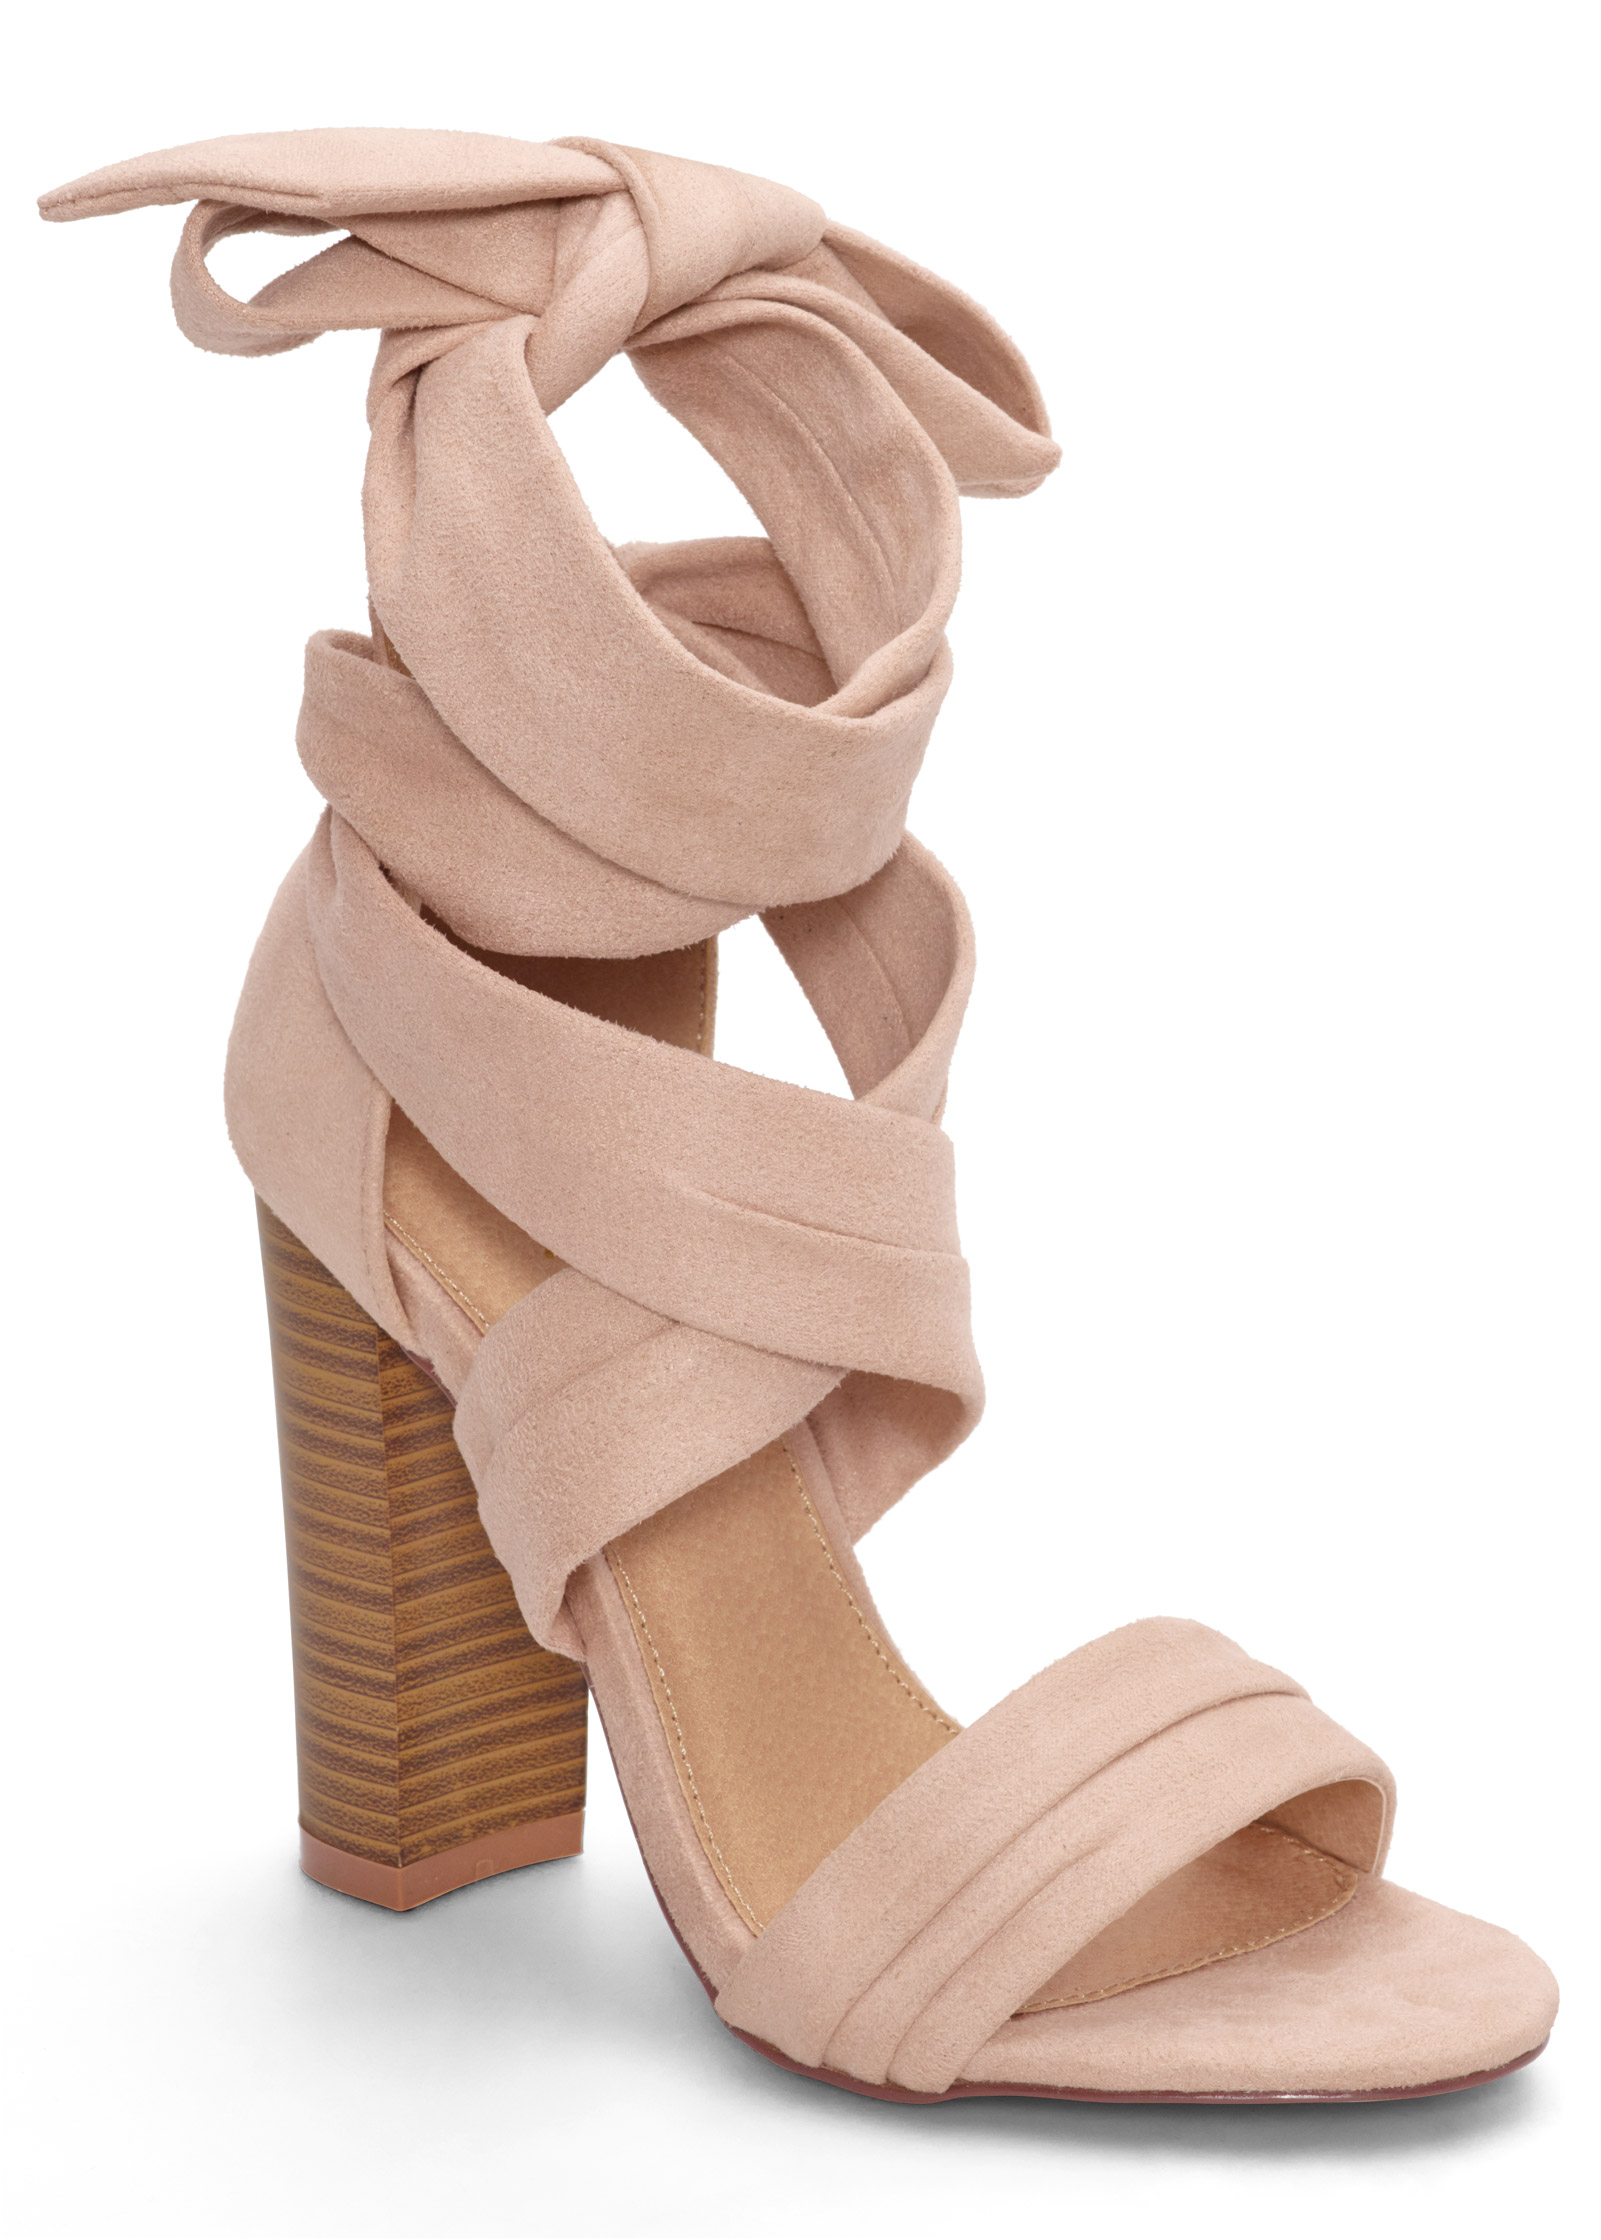 wrap around heels